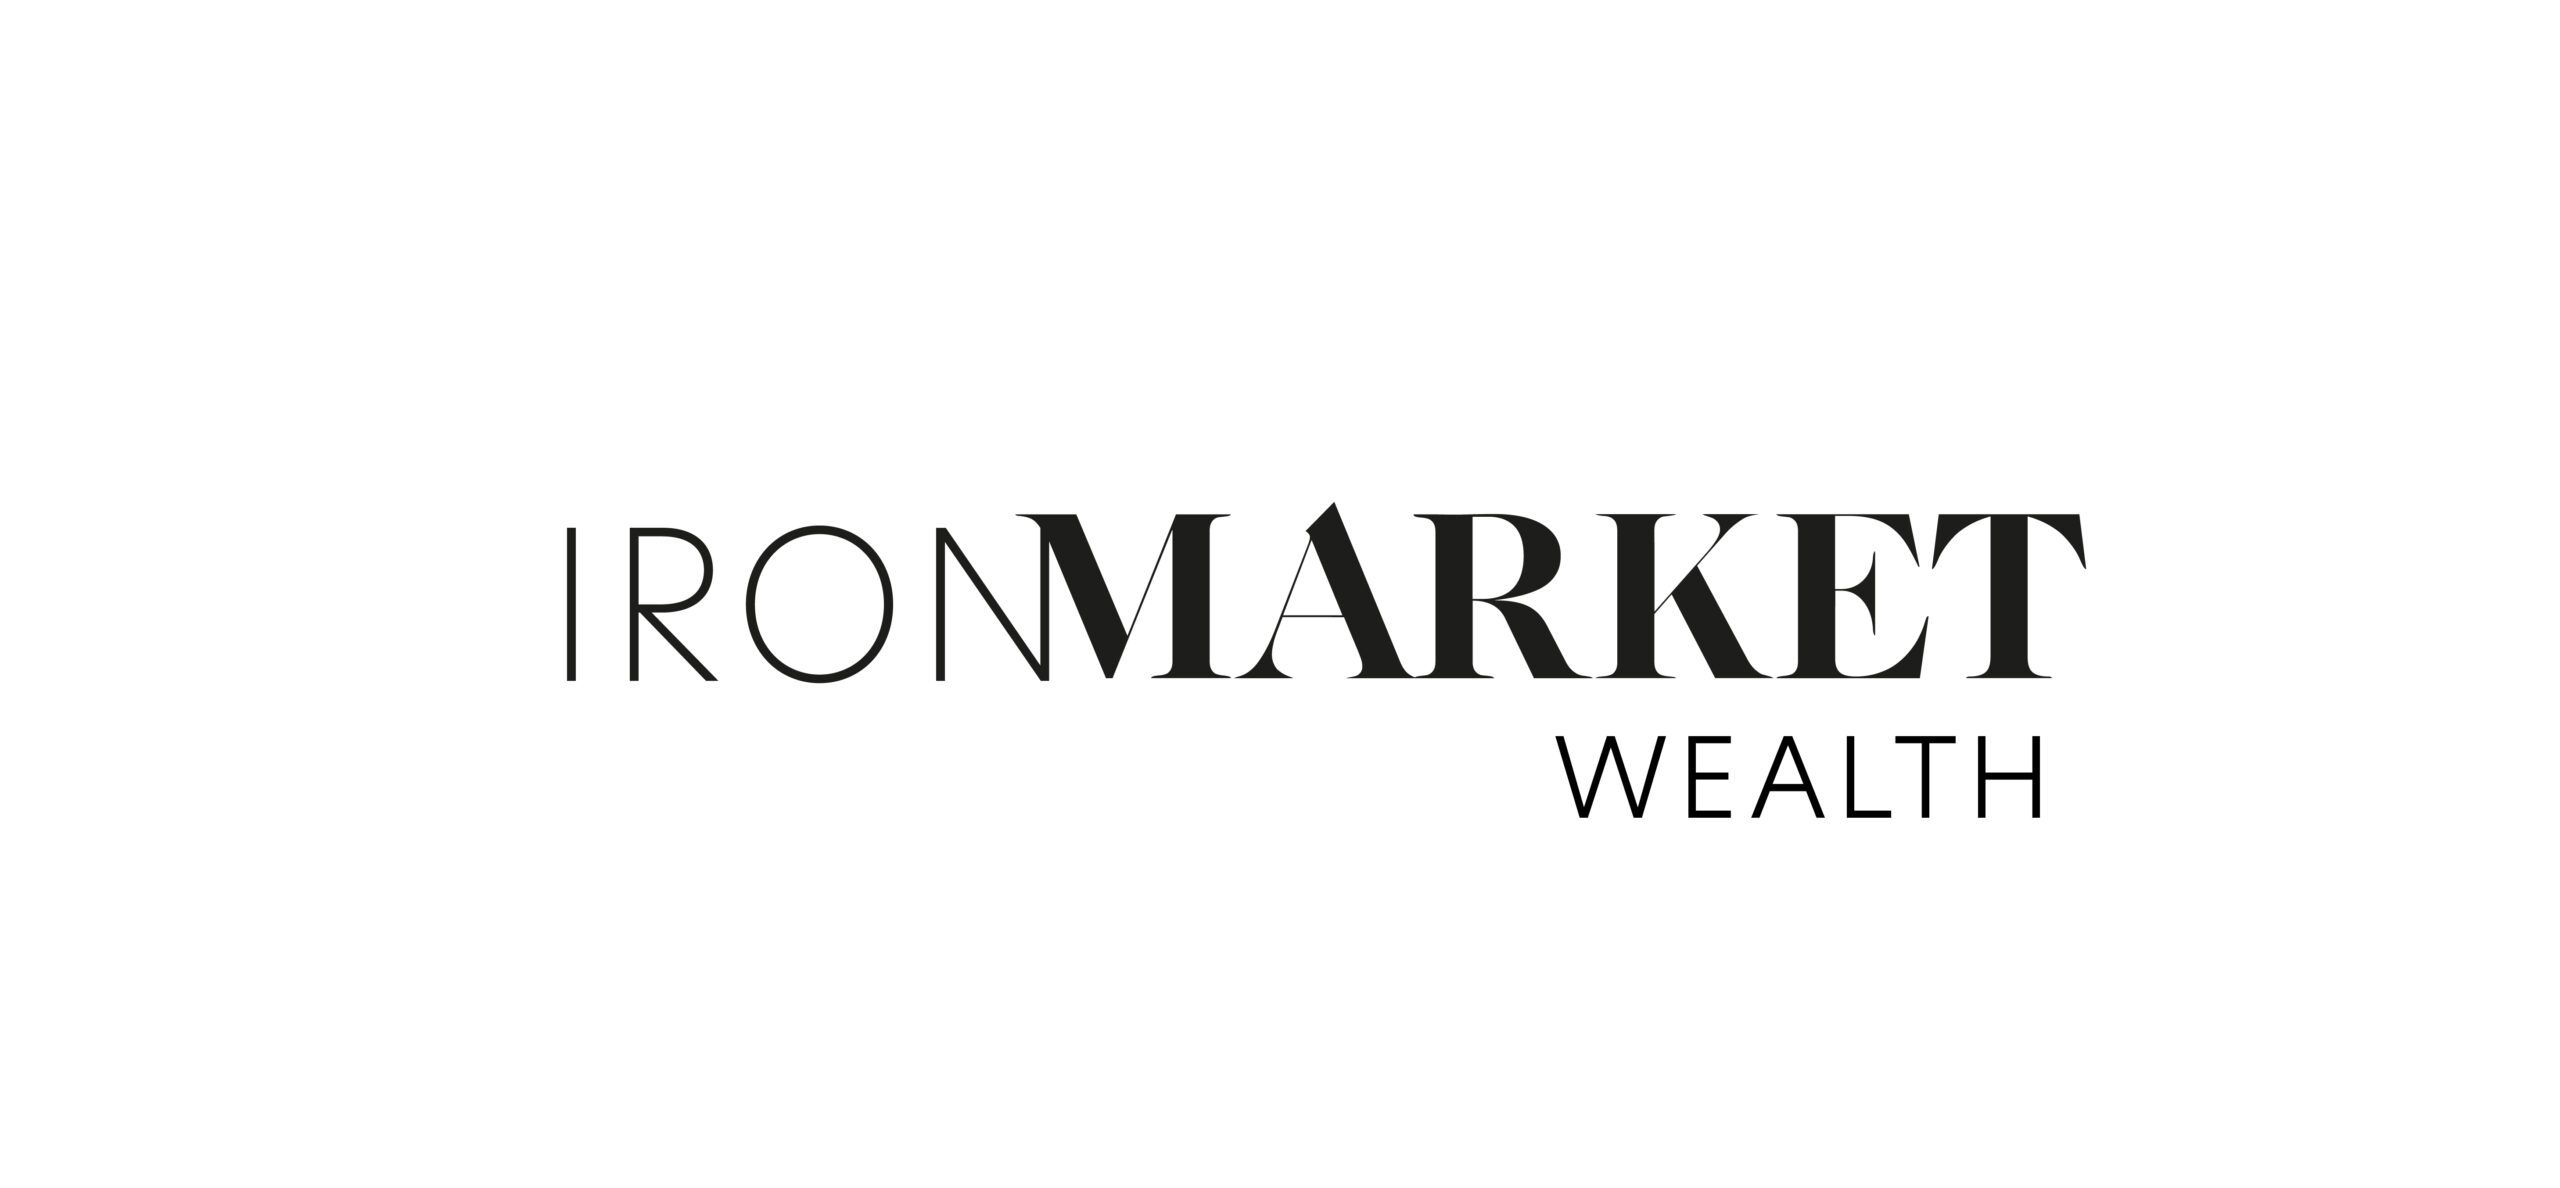 IronMarket Wealth logo